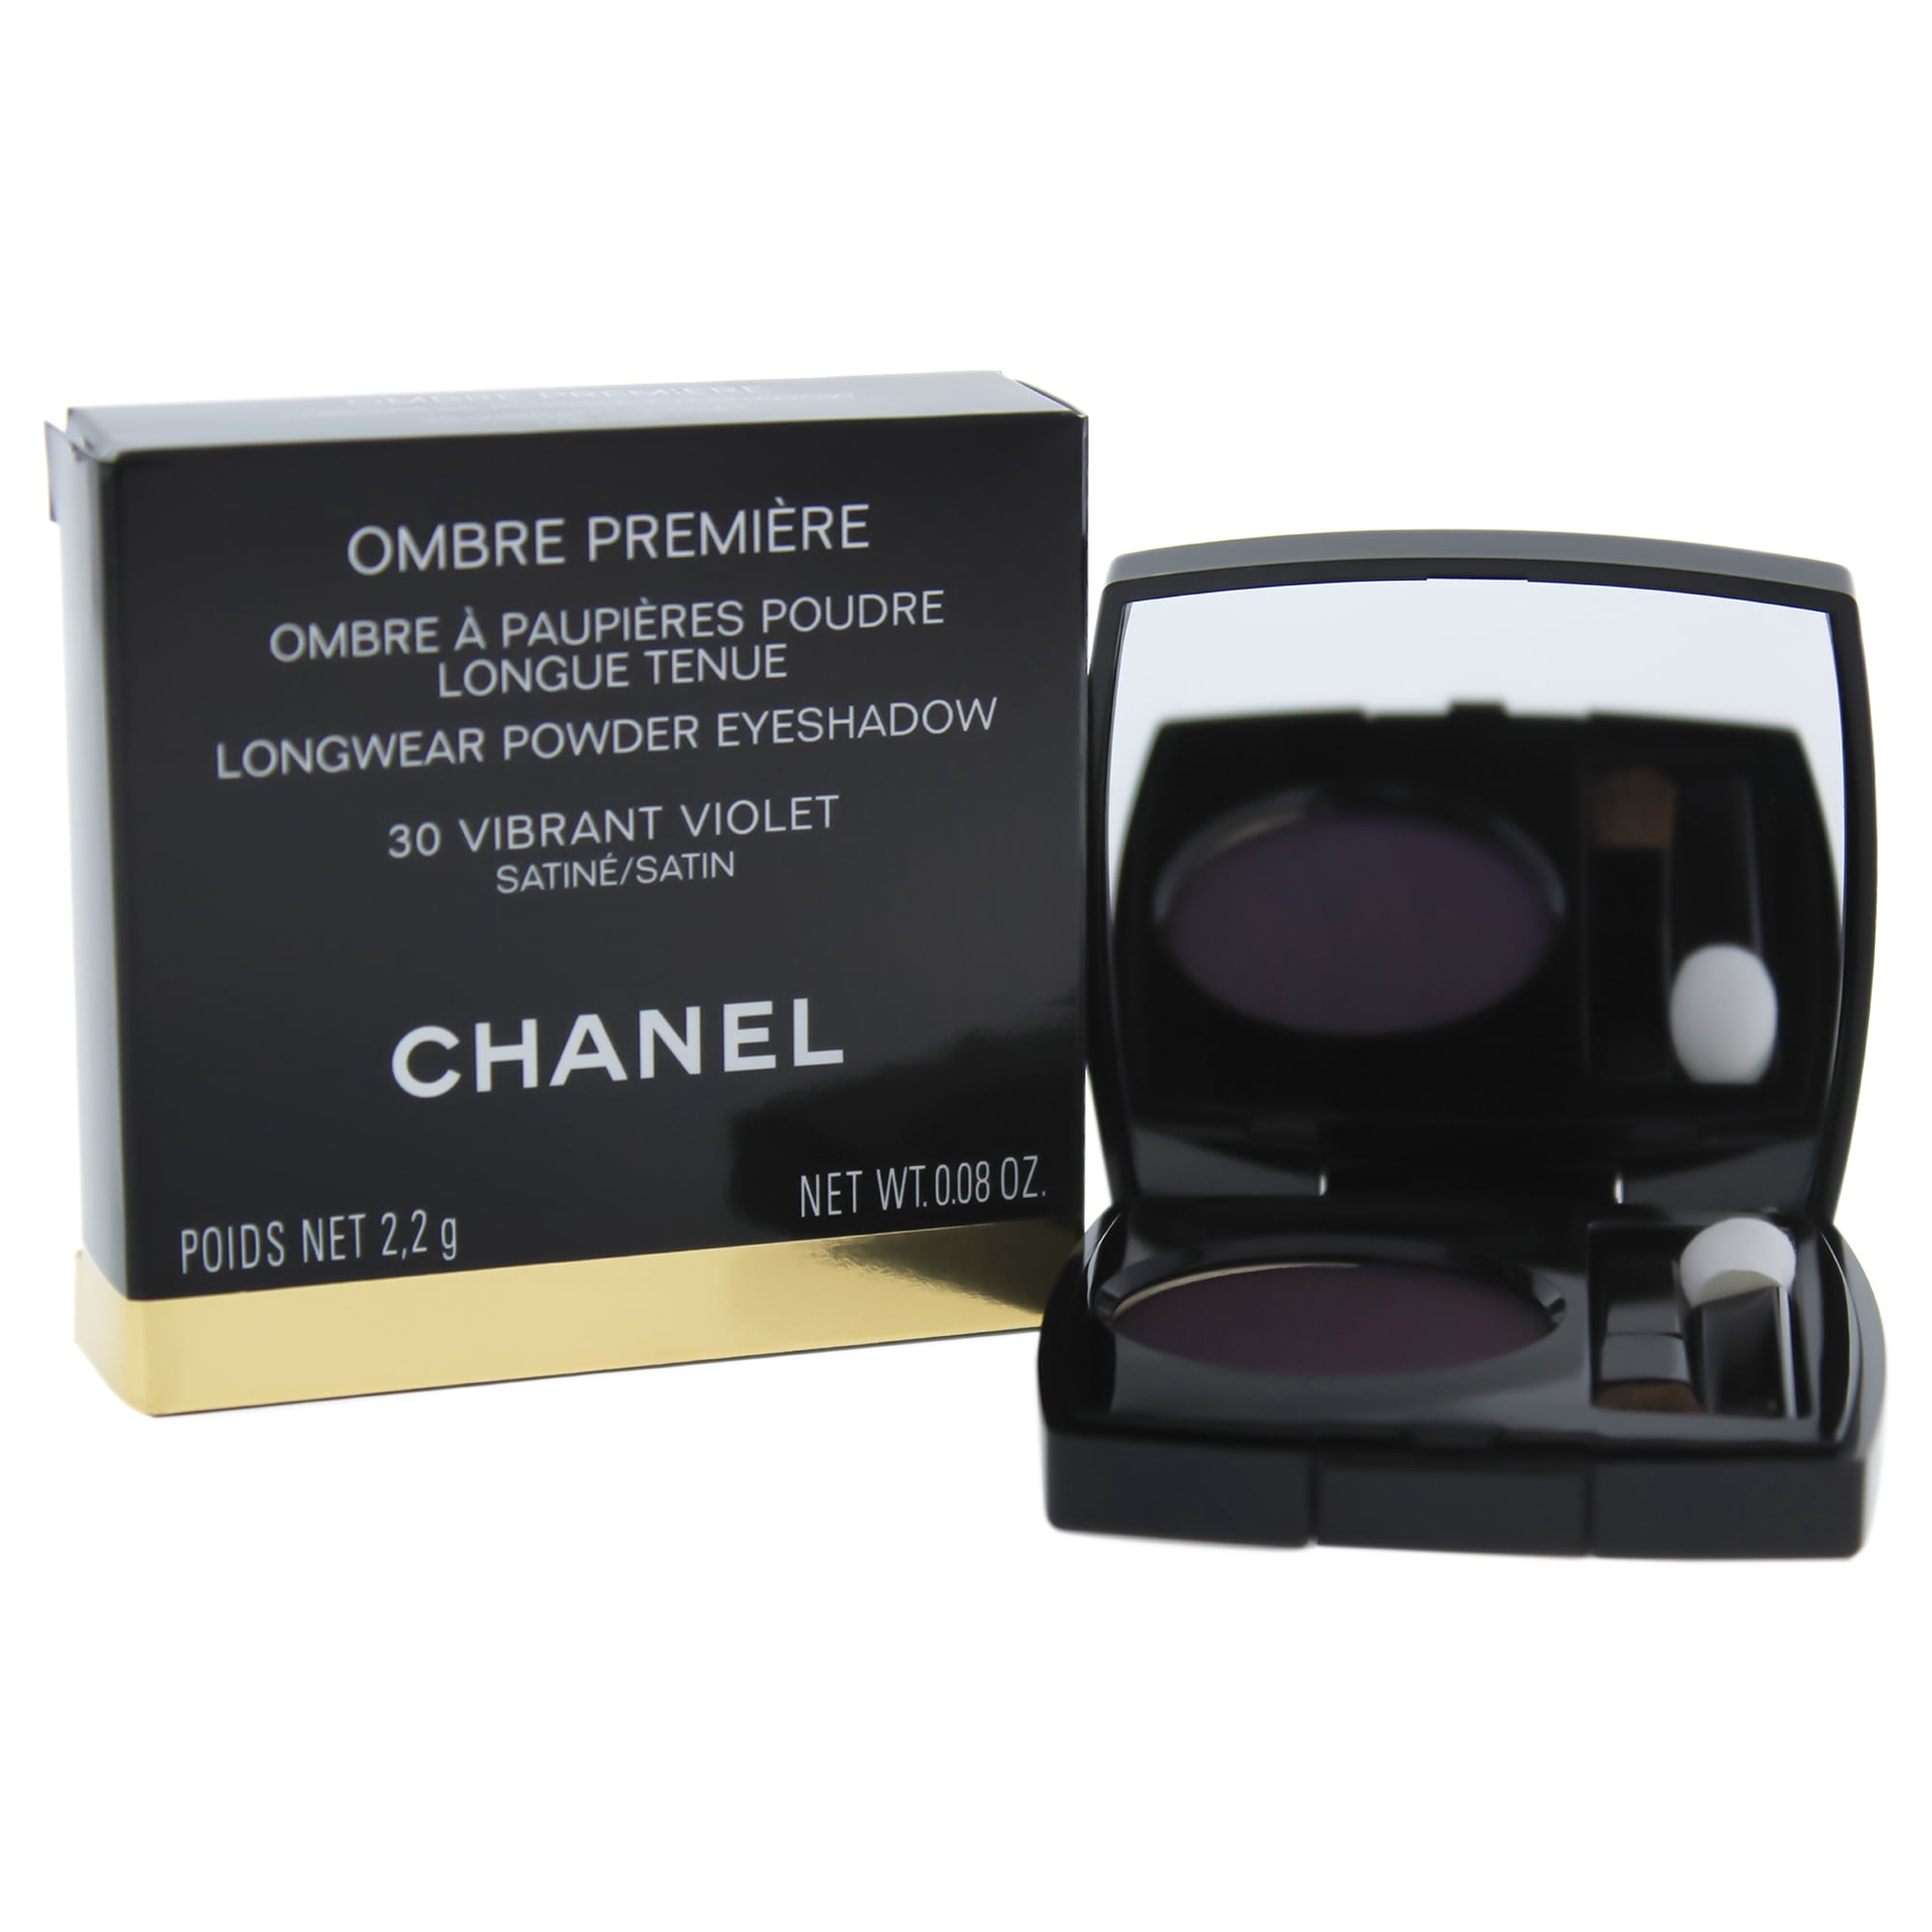 Chanel Ombre Premiere Longwear Powder Eyeshadow, 30 Vibrant Violet, 0.07  Ounce